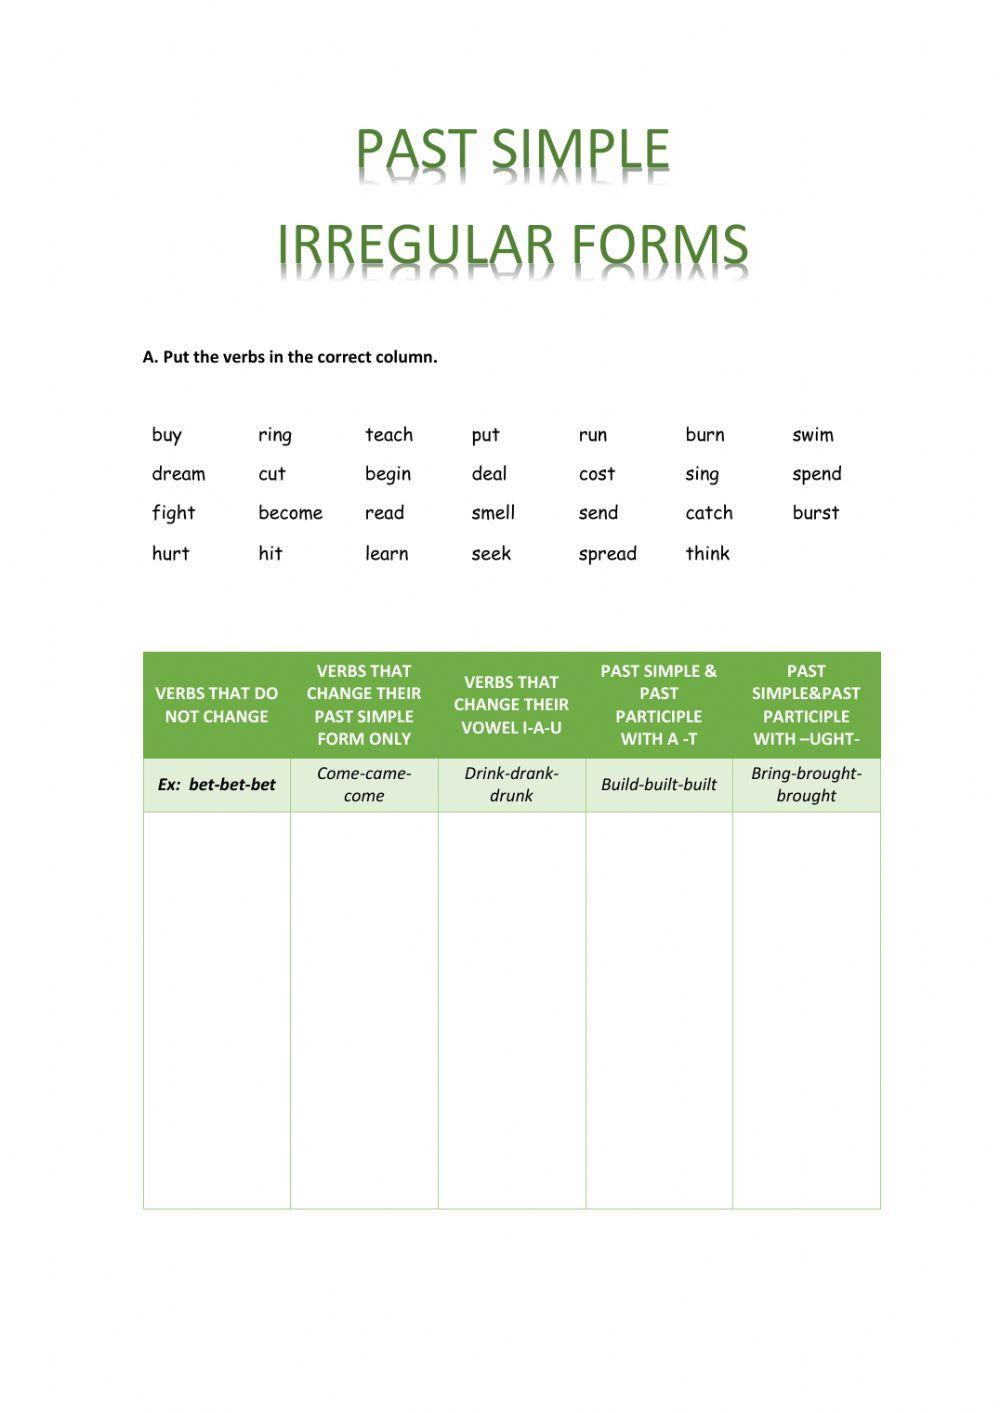 Past Simple - Irregular forms